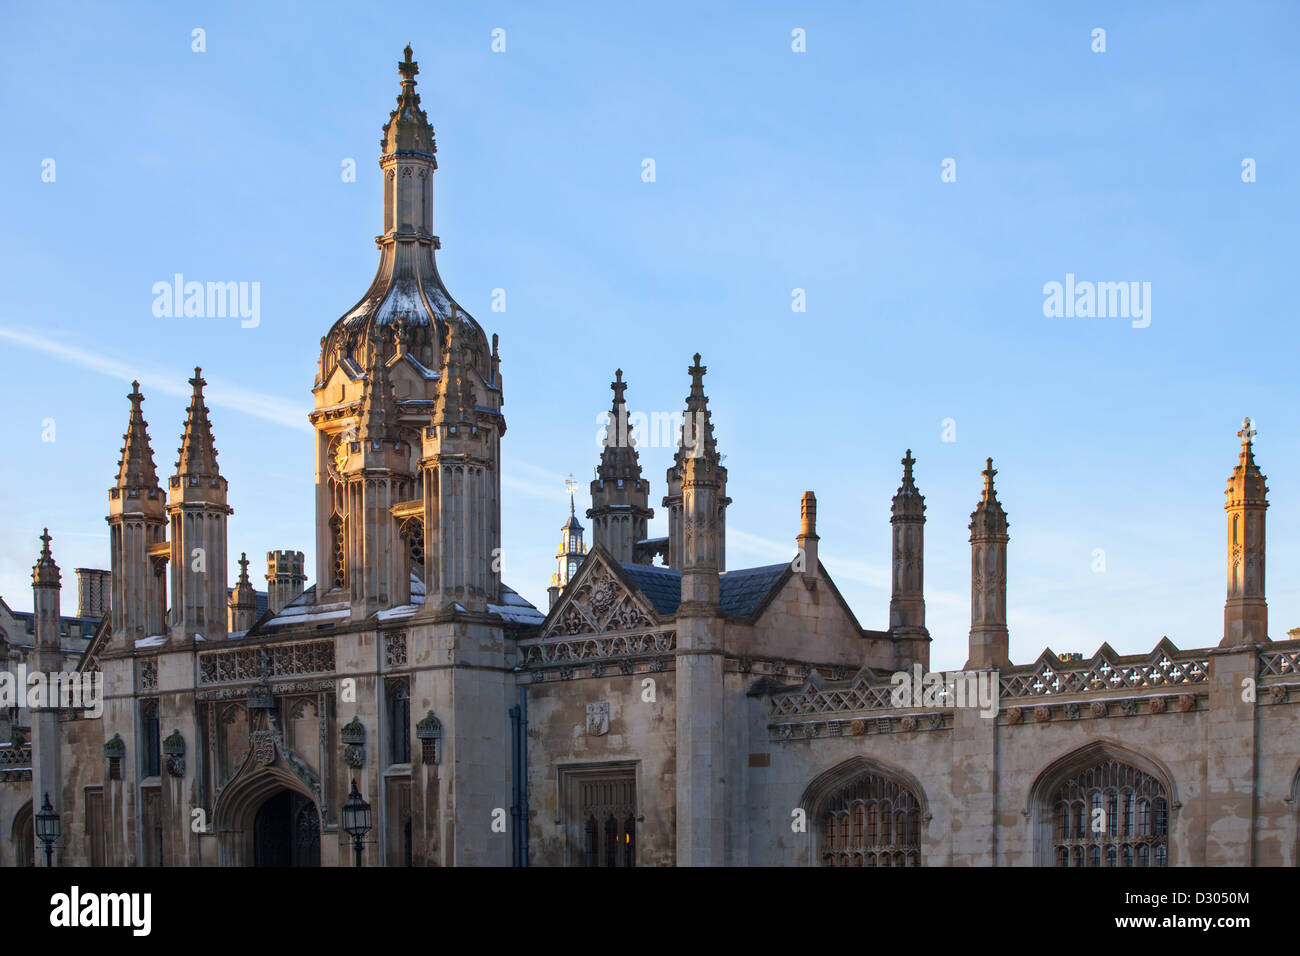 Kings College Spires and main gate, Cambridge university, England, UK Stock Photo